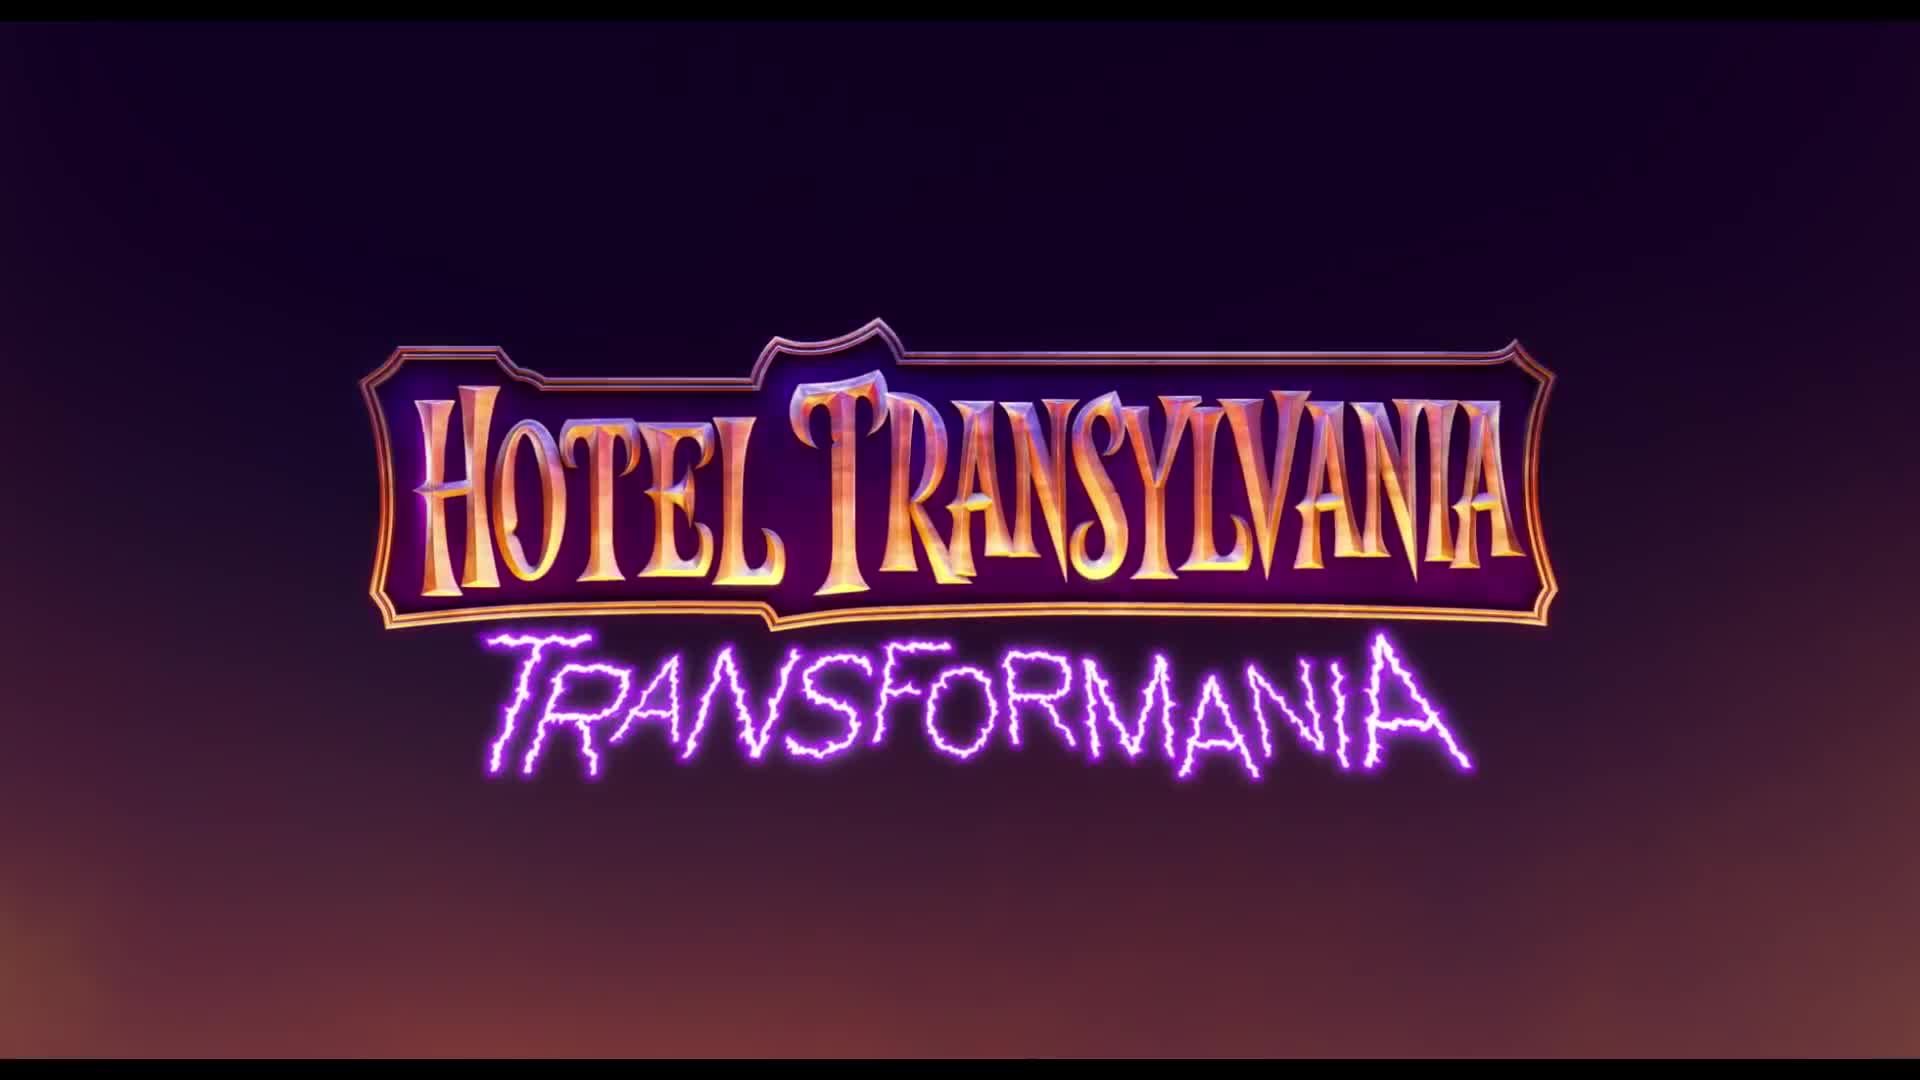 hotel transylvania transformania trailer